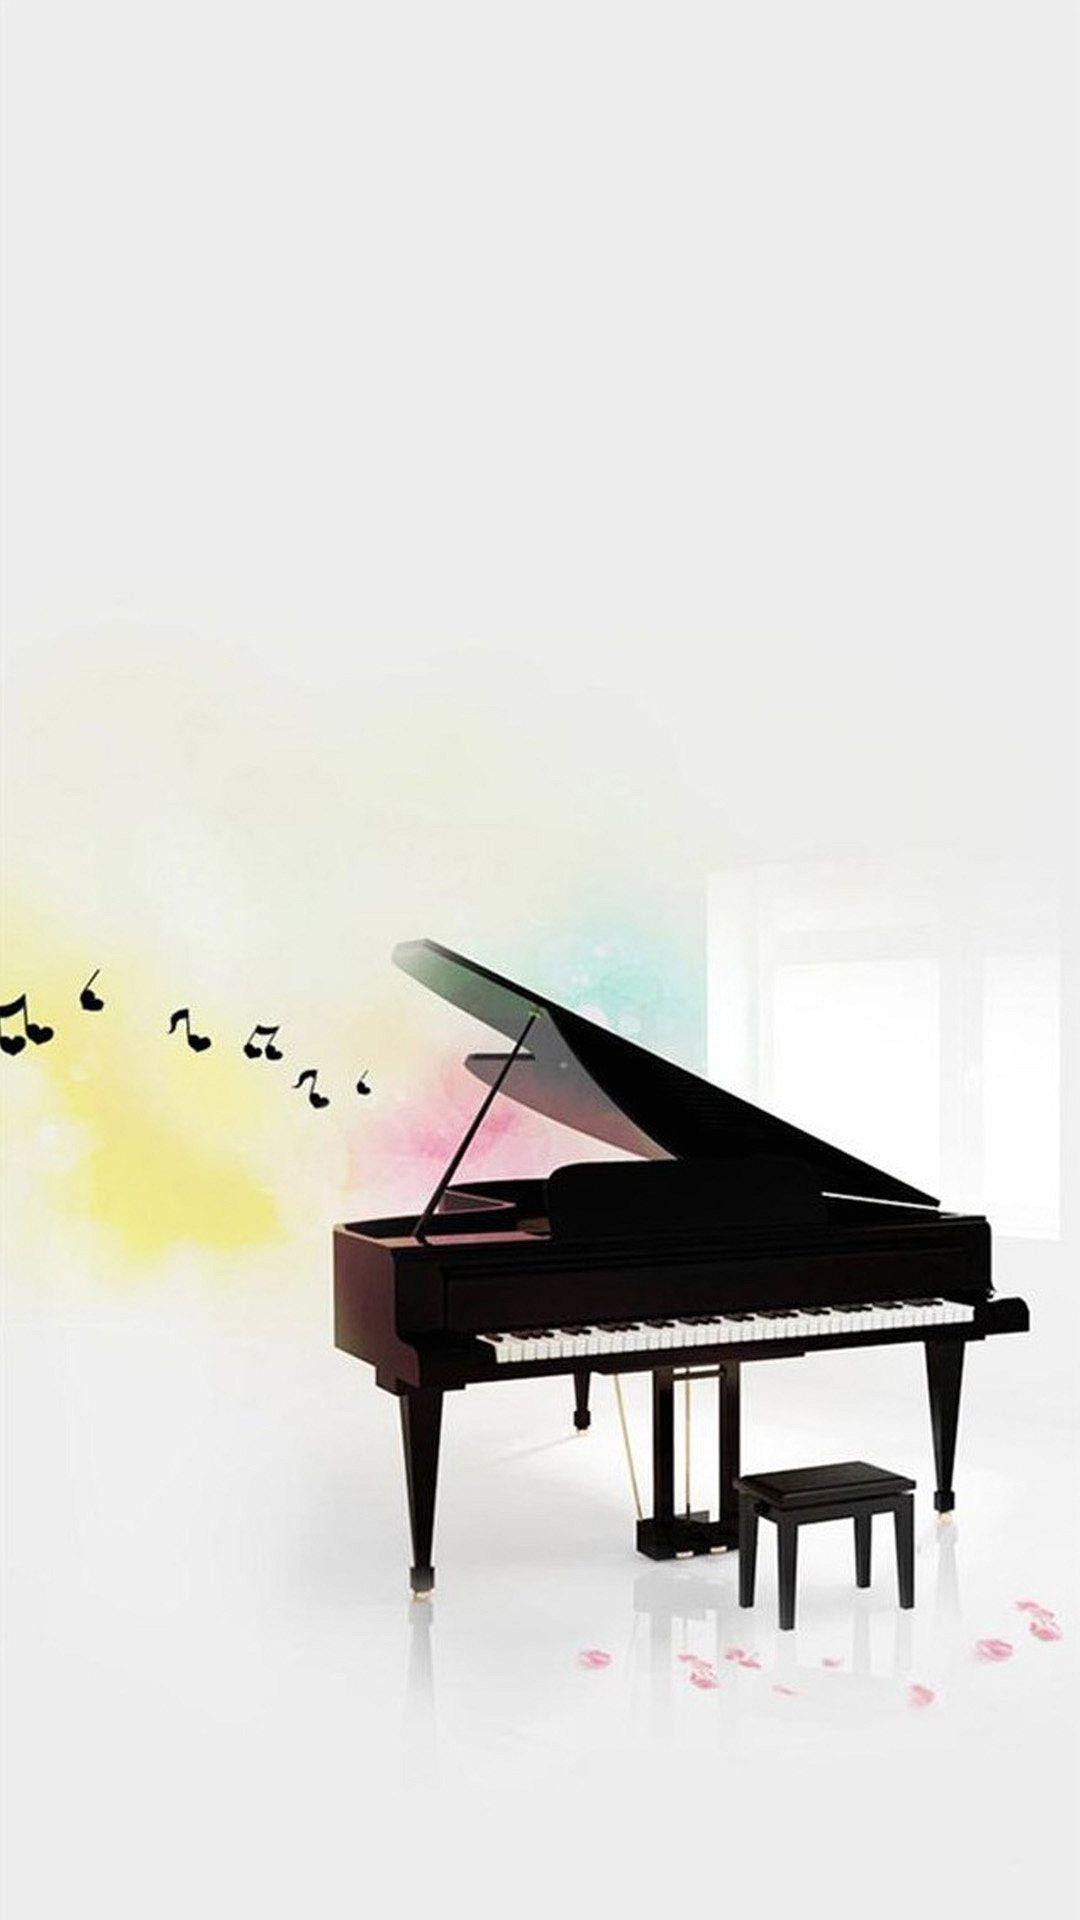 Wallpaper Full HD 1080 X 1920 Smartphone Music Piano x 1920